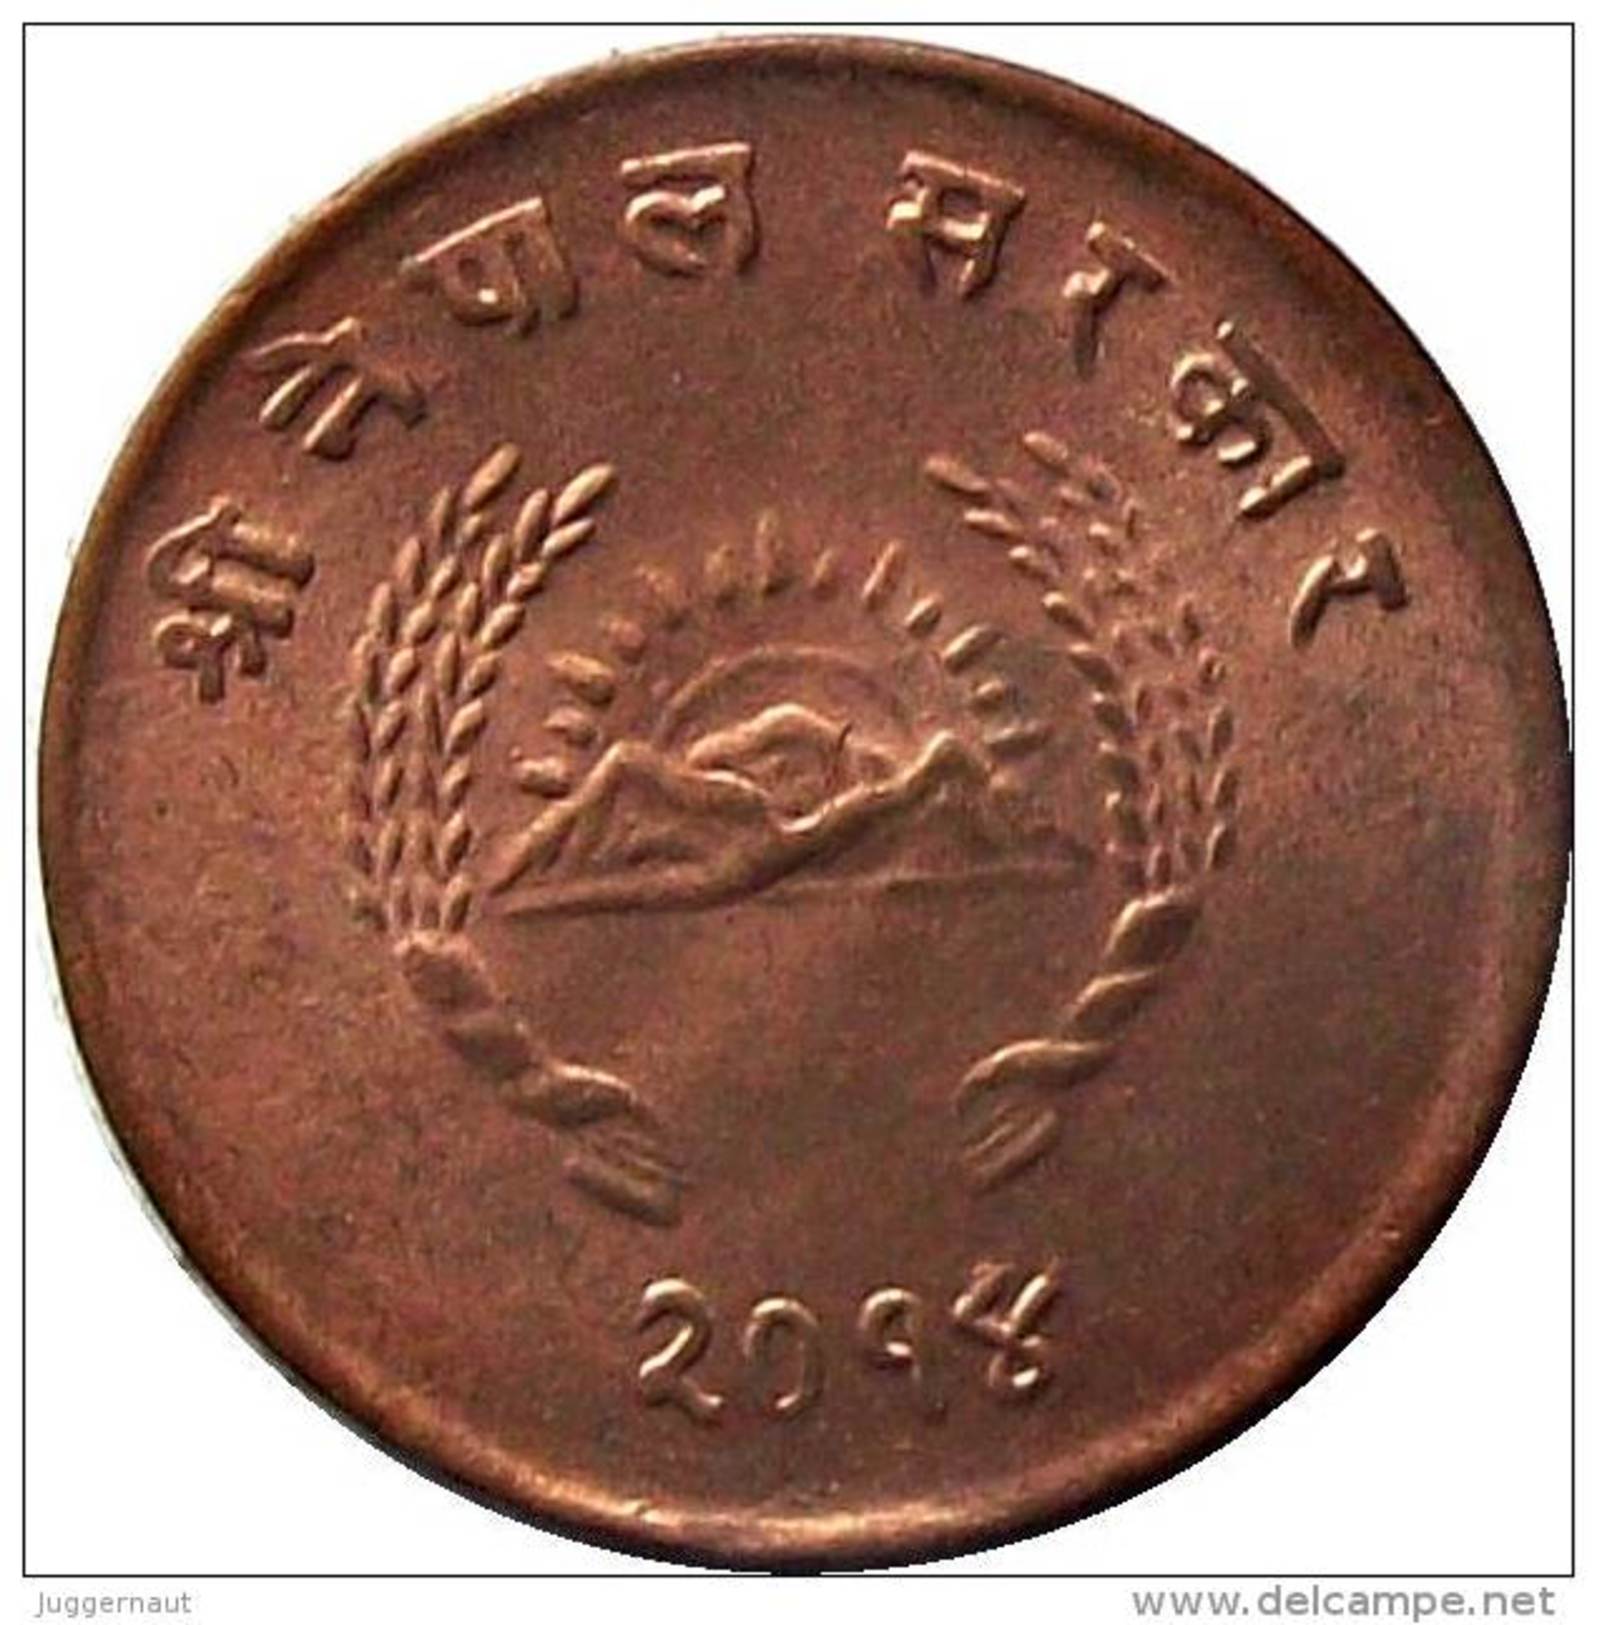 NEPAL 5 PAISA BRONZE CIRCULATION COIN 1957 AD KM-736 UNCIRCULATED UNC - Nepal